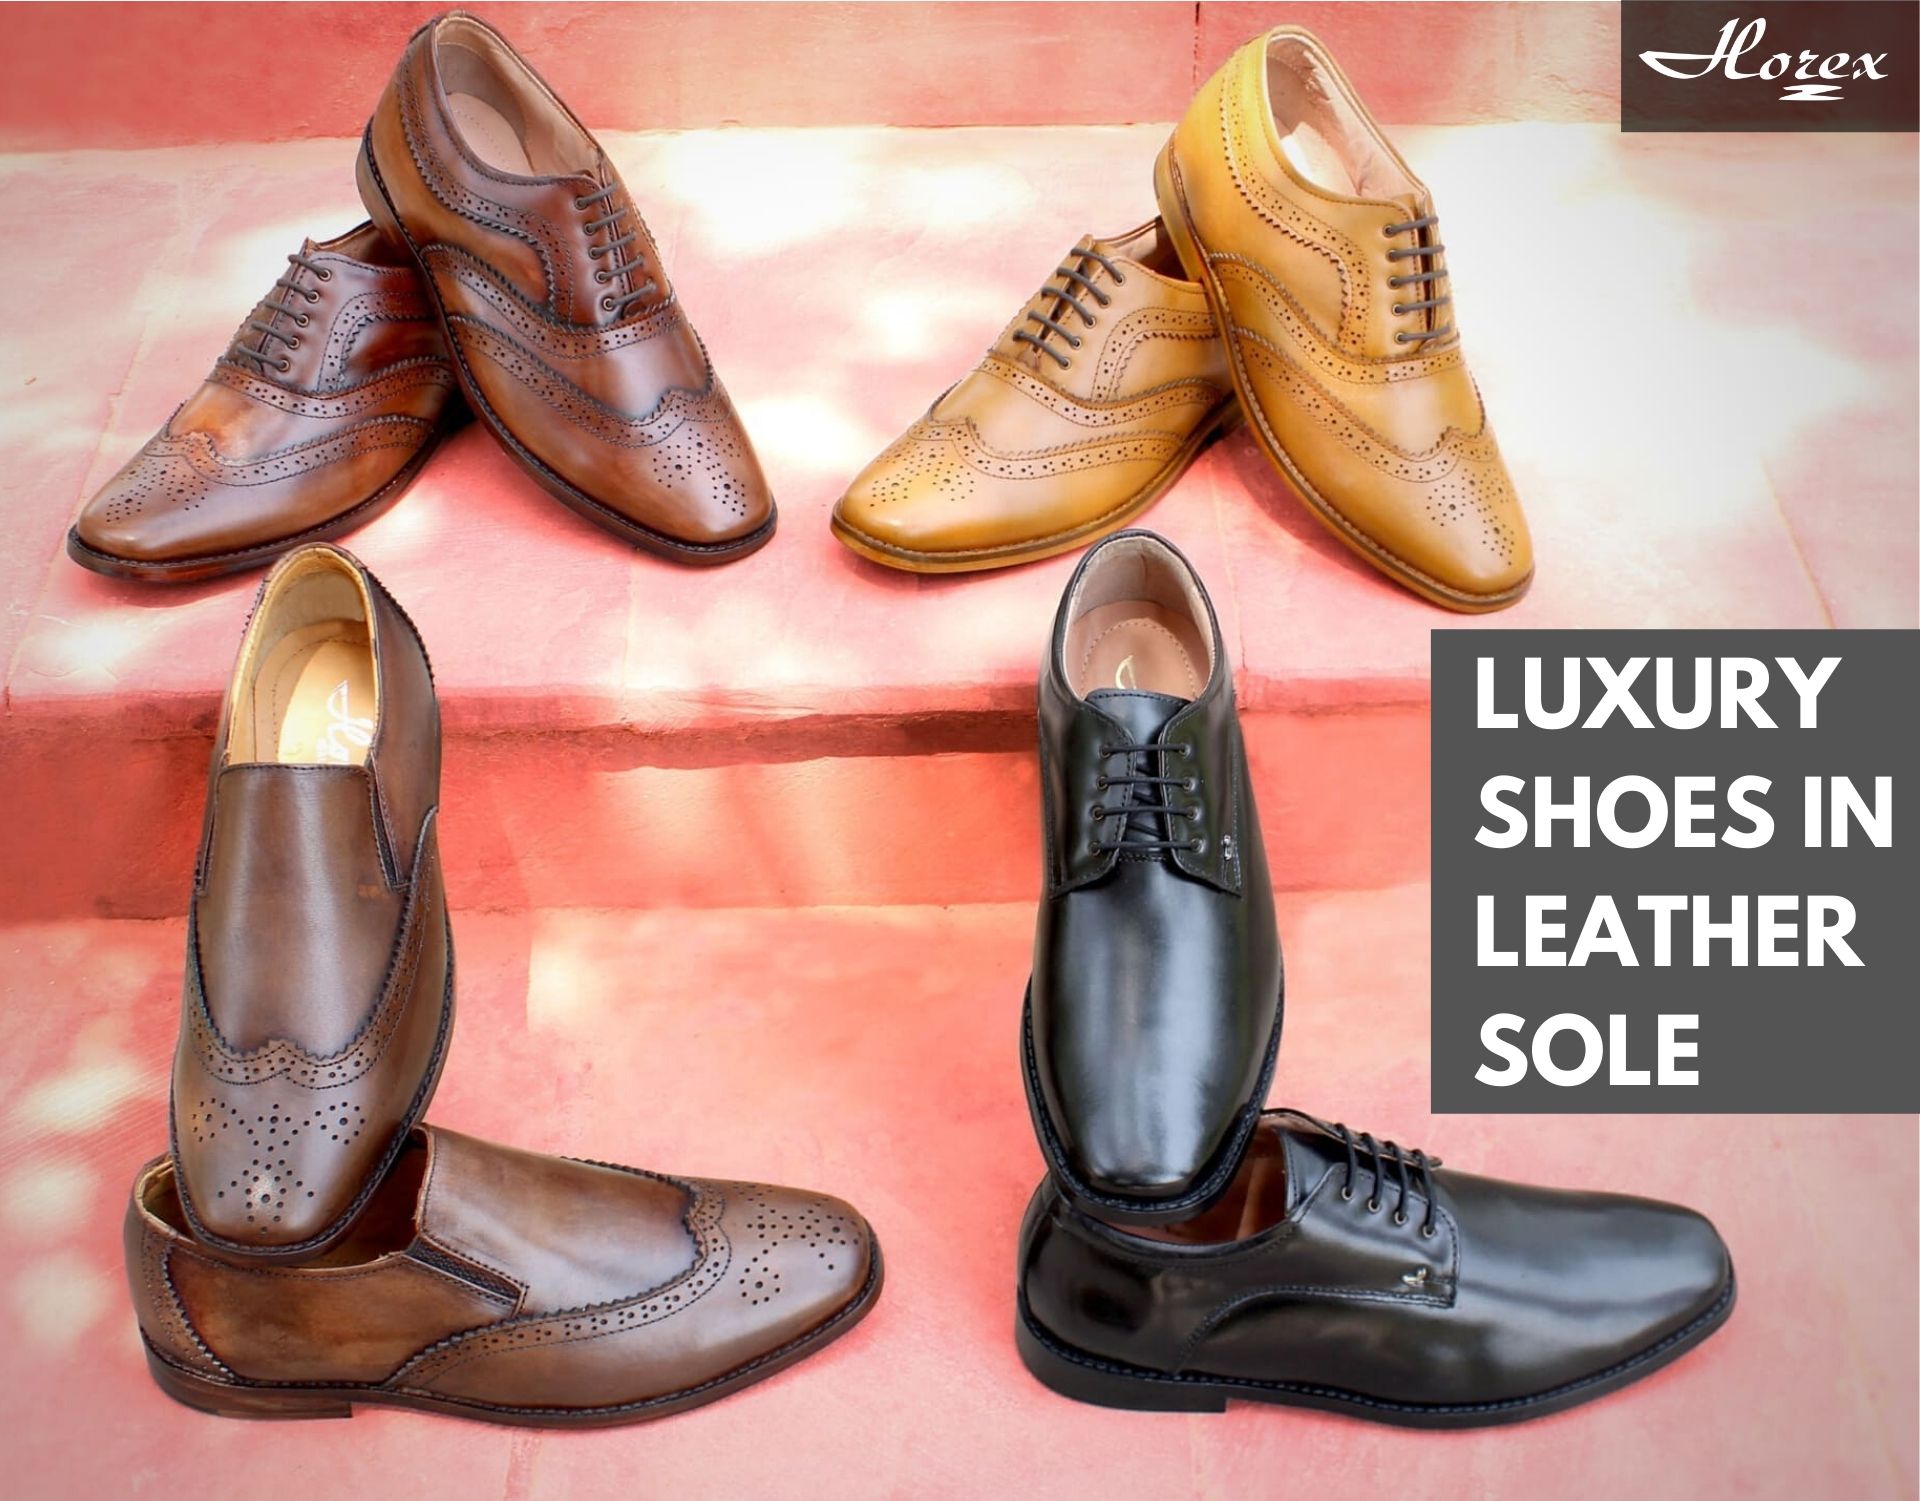 Buy 100% Real Leather Shoes Online For Men & Women - Horex®